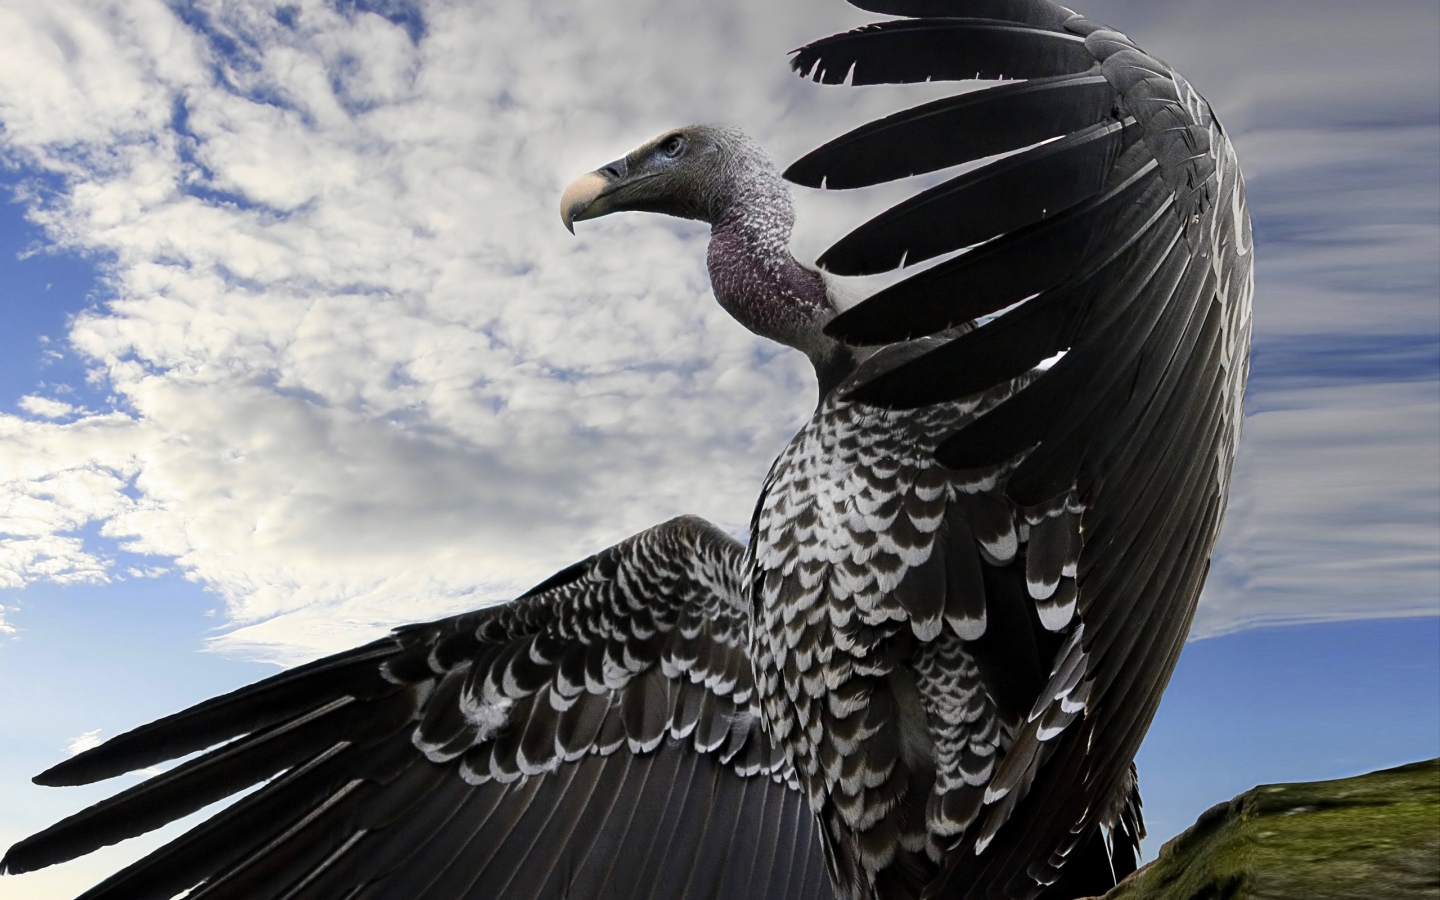 Breathtaking Condor for 1440 x 900 widescreen resolution